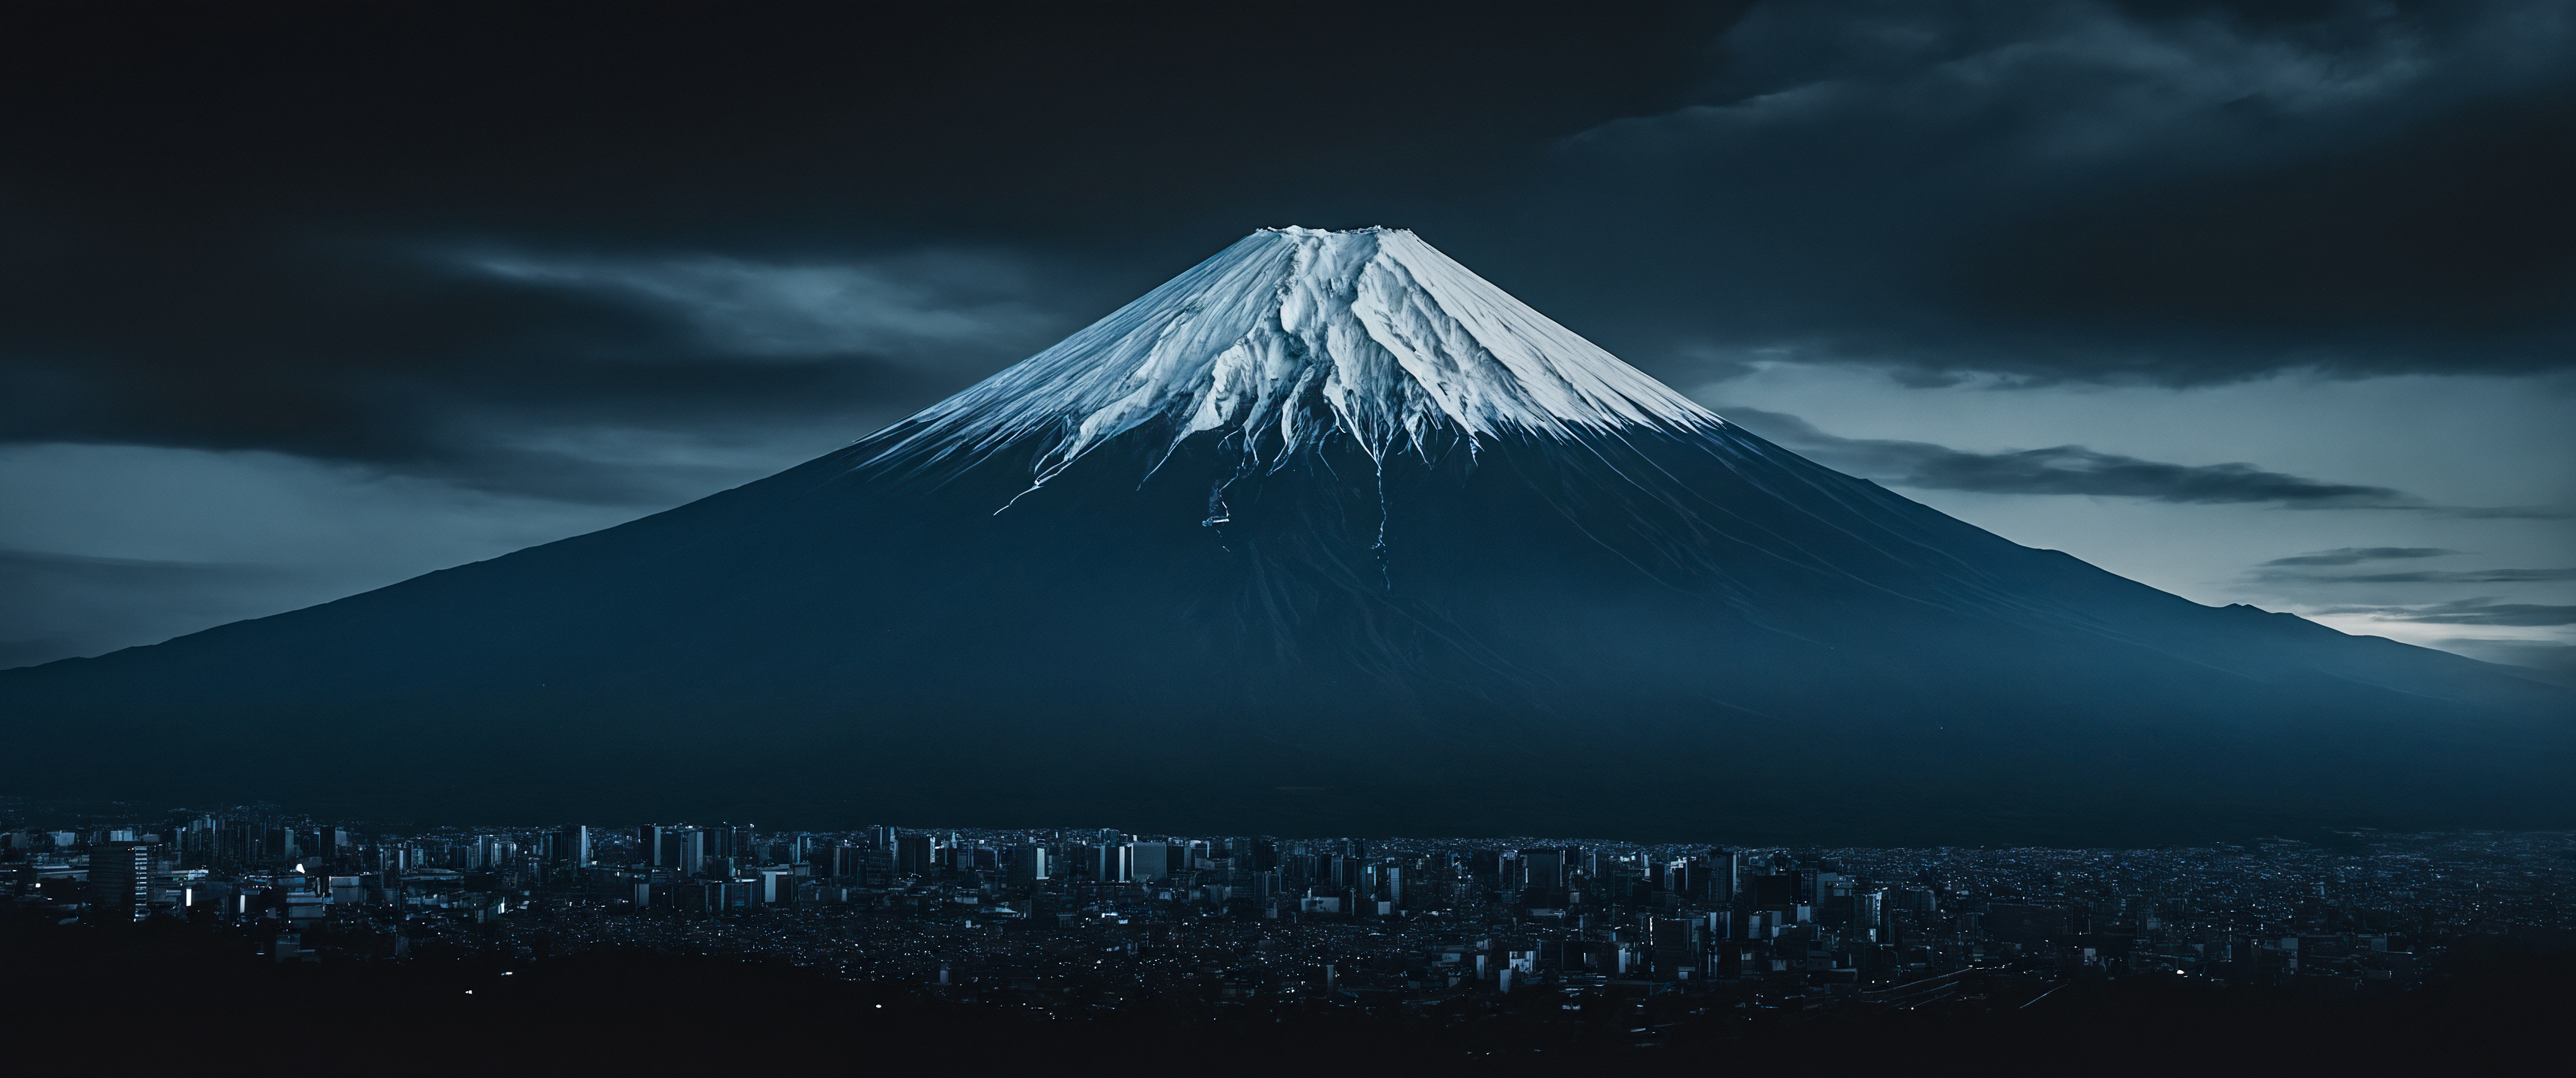 General 3440x1440 AI art Mount Fuji landscape digital art snowy peak clouds sky city mountains